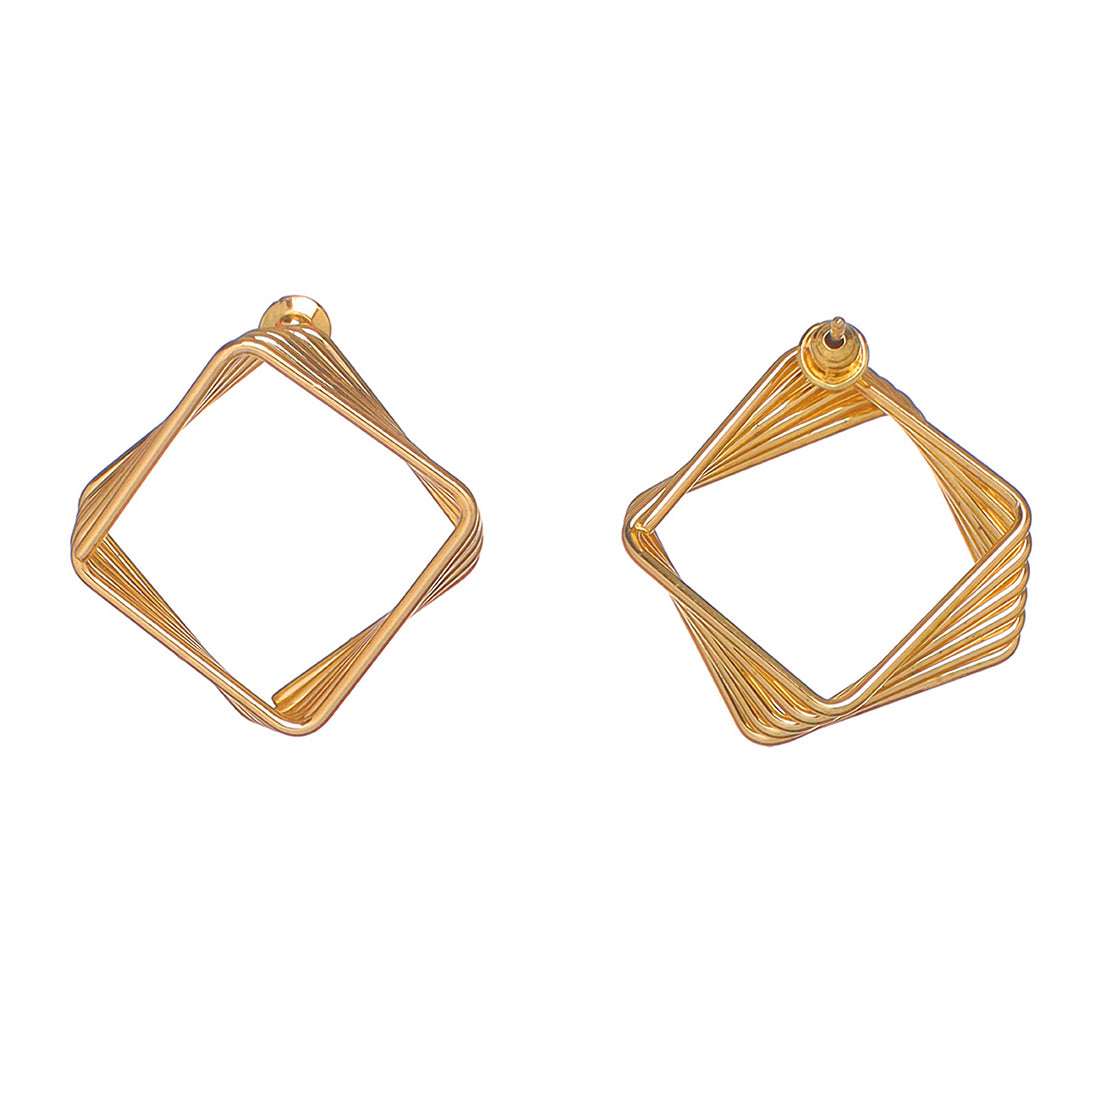 Gold-Toned Layered Geometric Square Stud Earrings